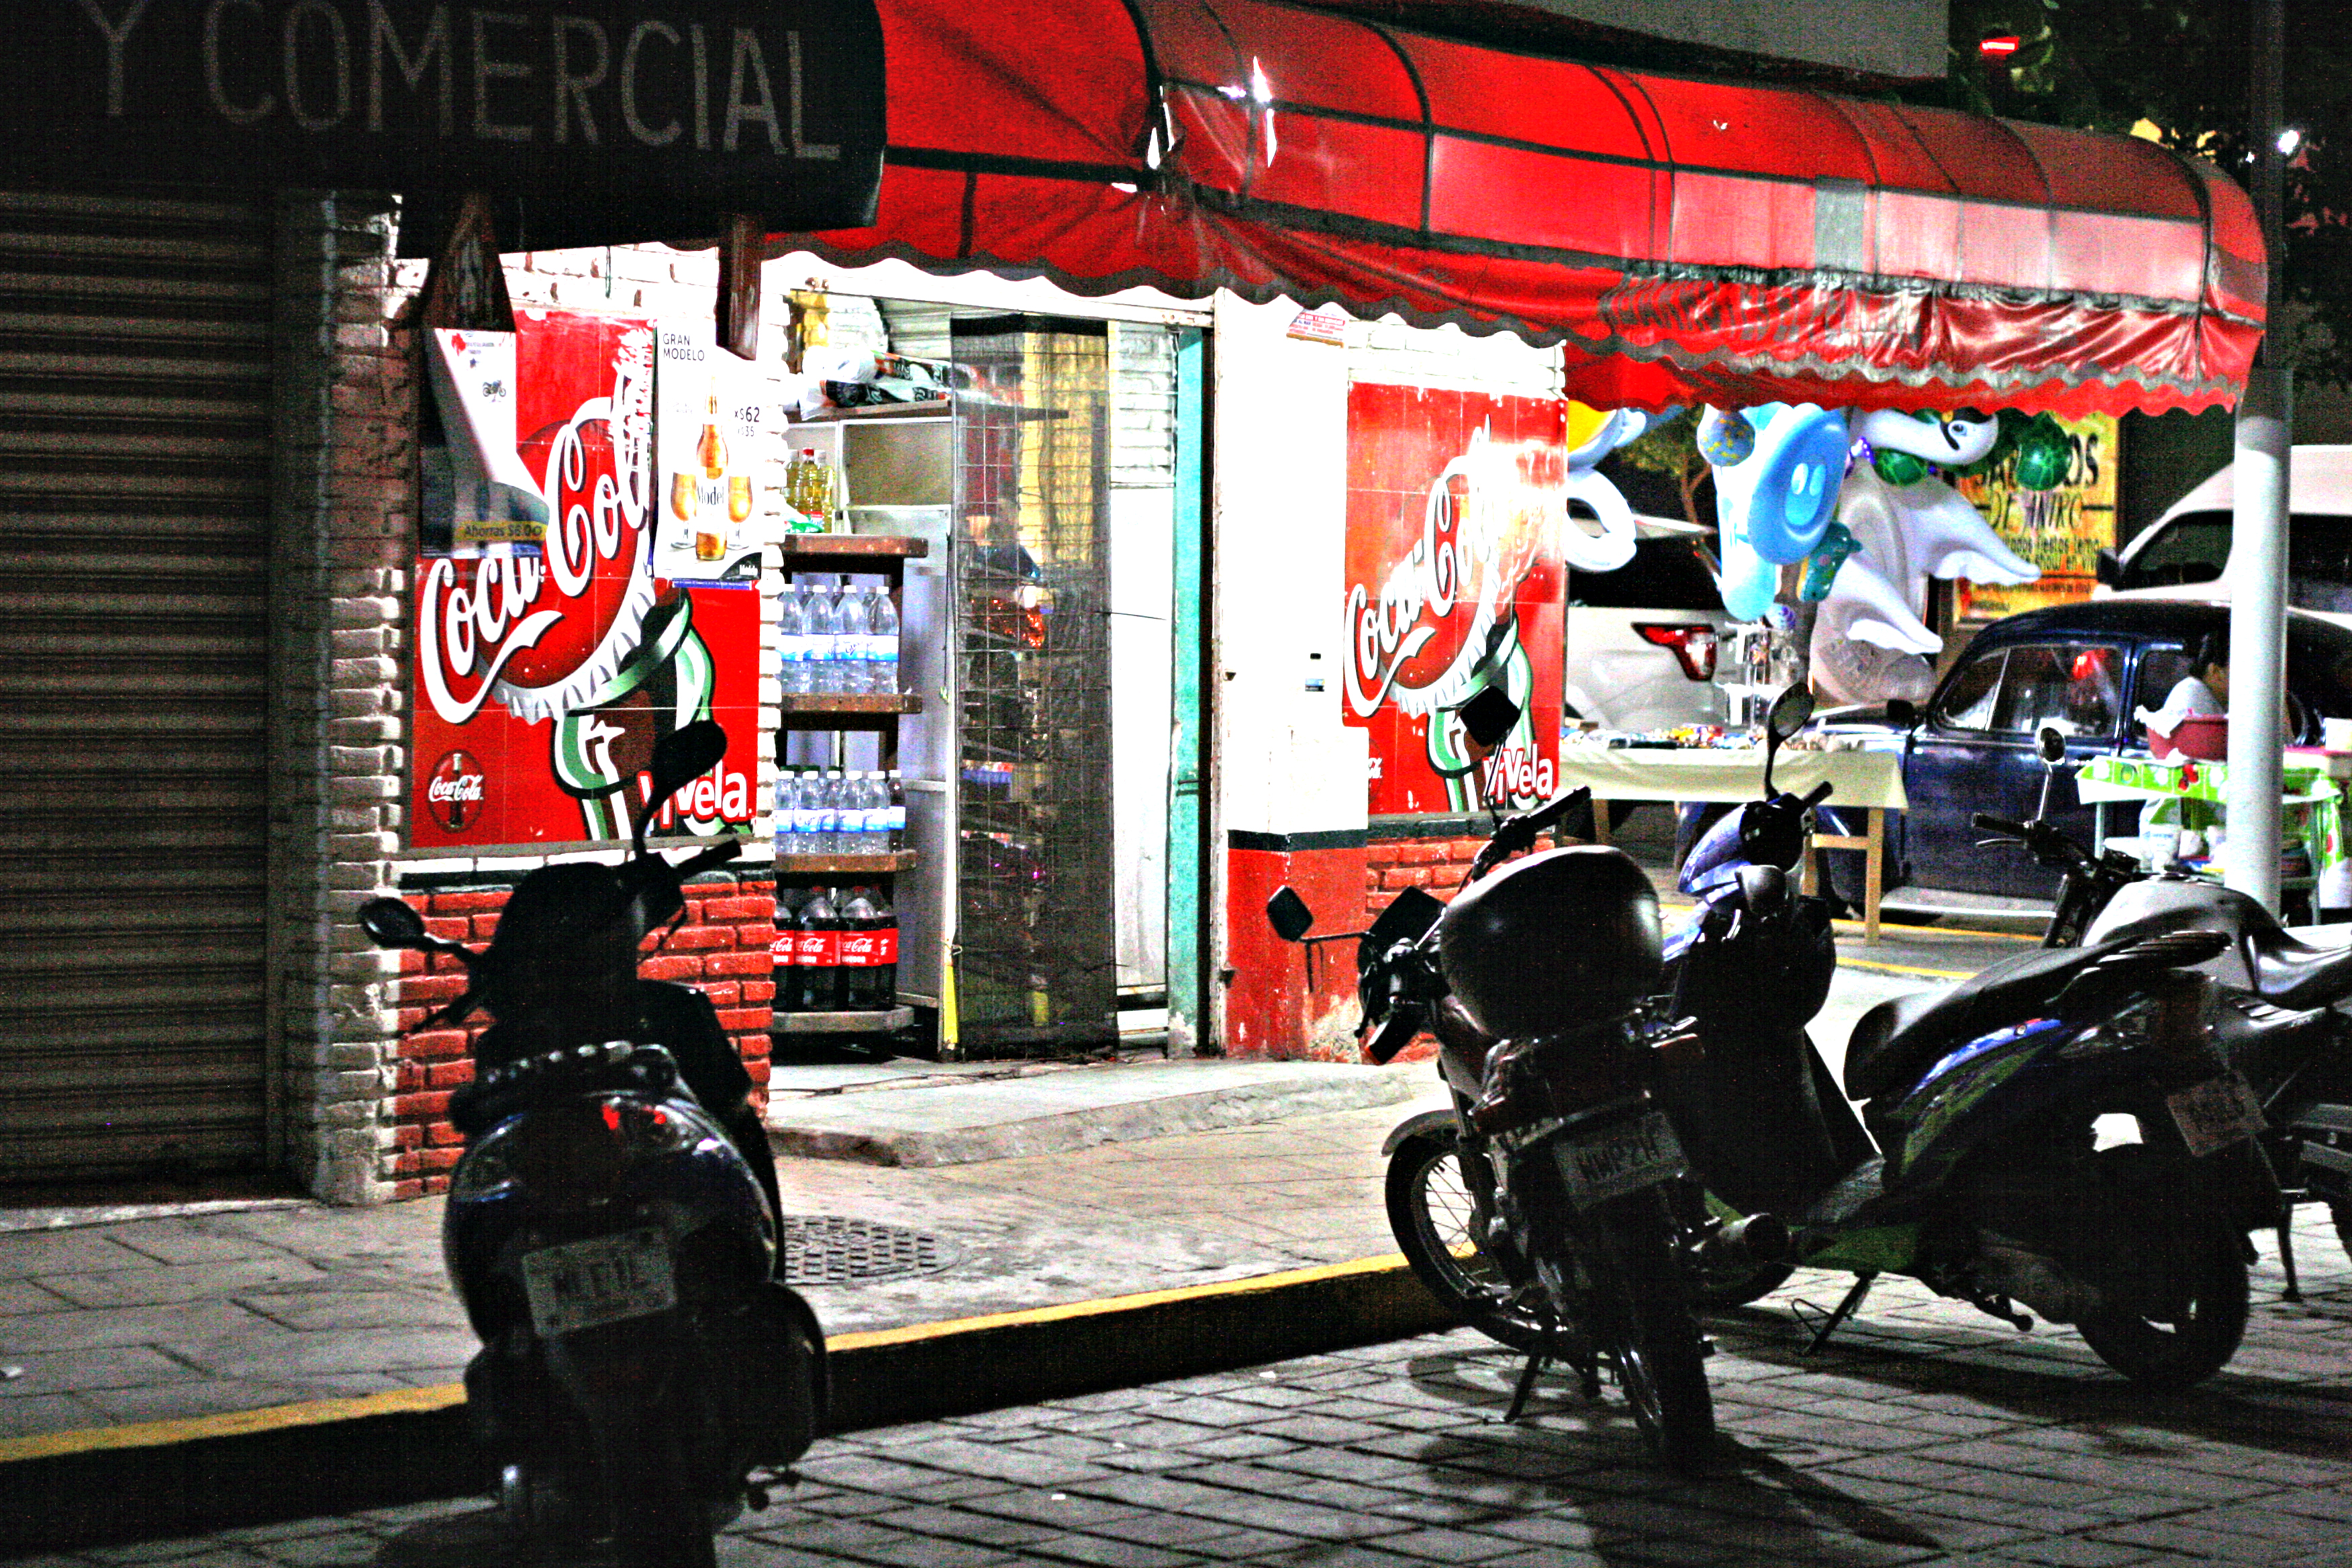 mex-puerto-coke-sign-IMG_0668